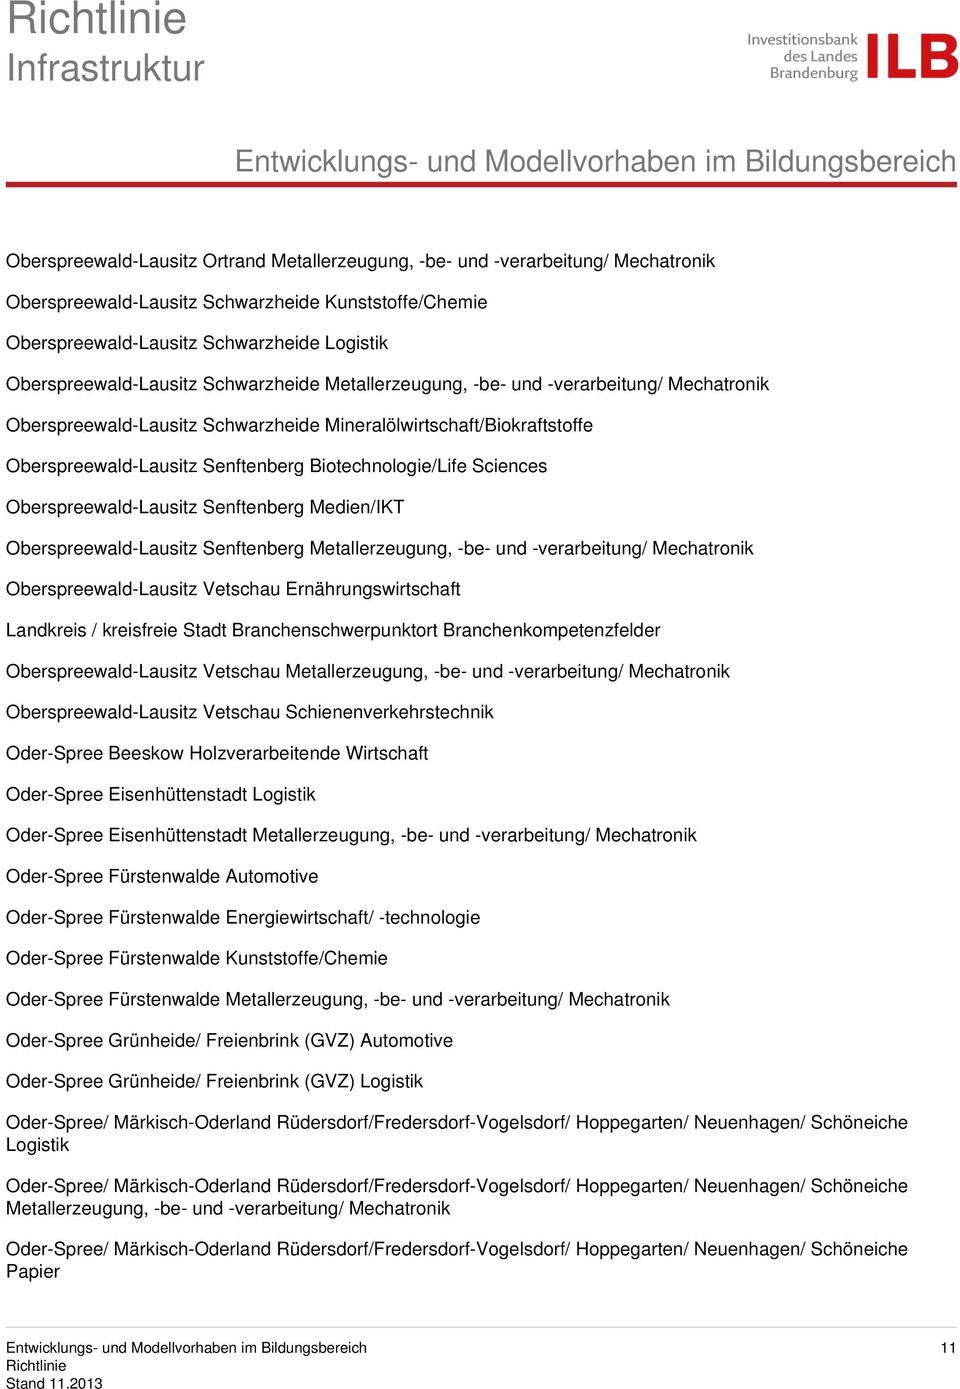 Biotechnologie/Life Sciences Oberspreewald-Lausitz Senftenberg Medien/IKT Oberspreewald-Lausitz Senftenberg Metallerzeugung, -be- und -verarbeitung/ Mechatronik Oberspreewald-Lausitz Vetschau